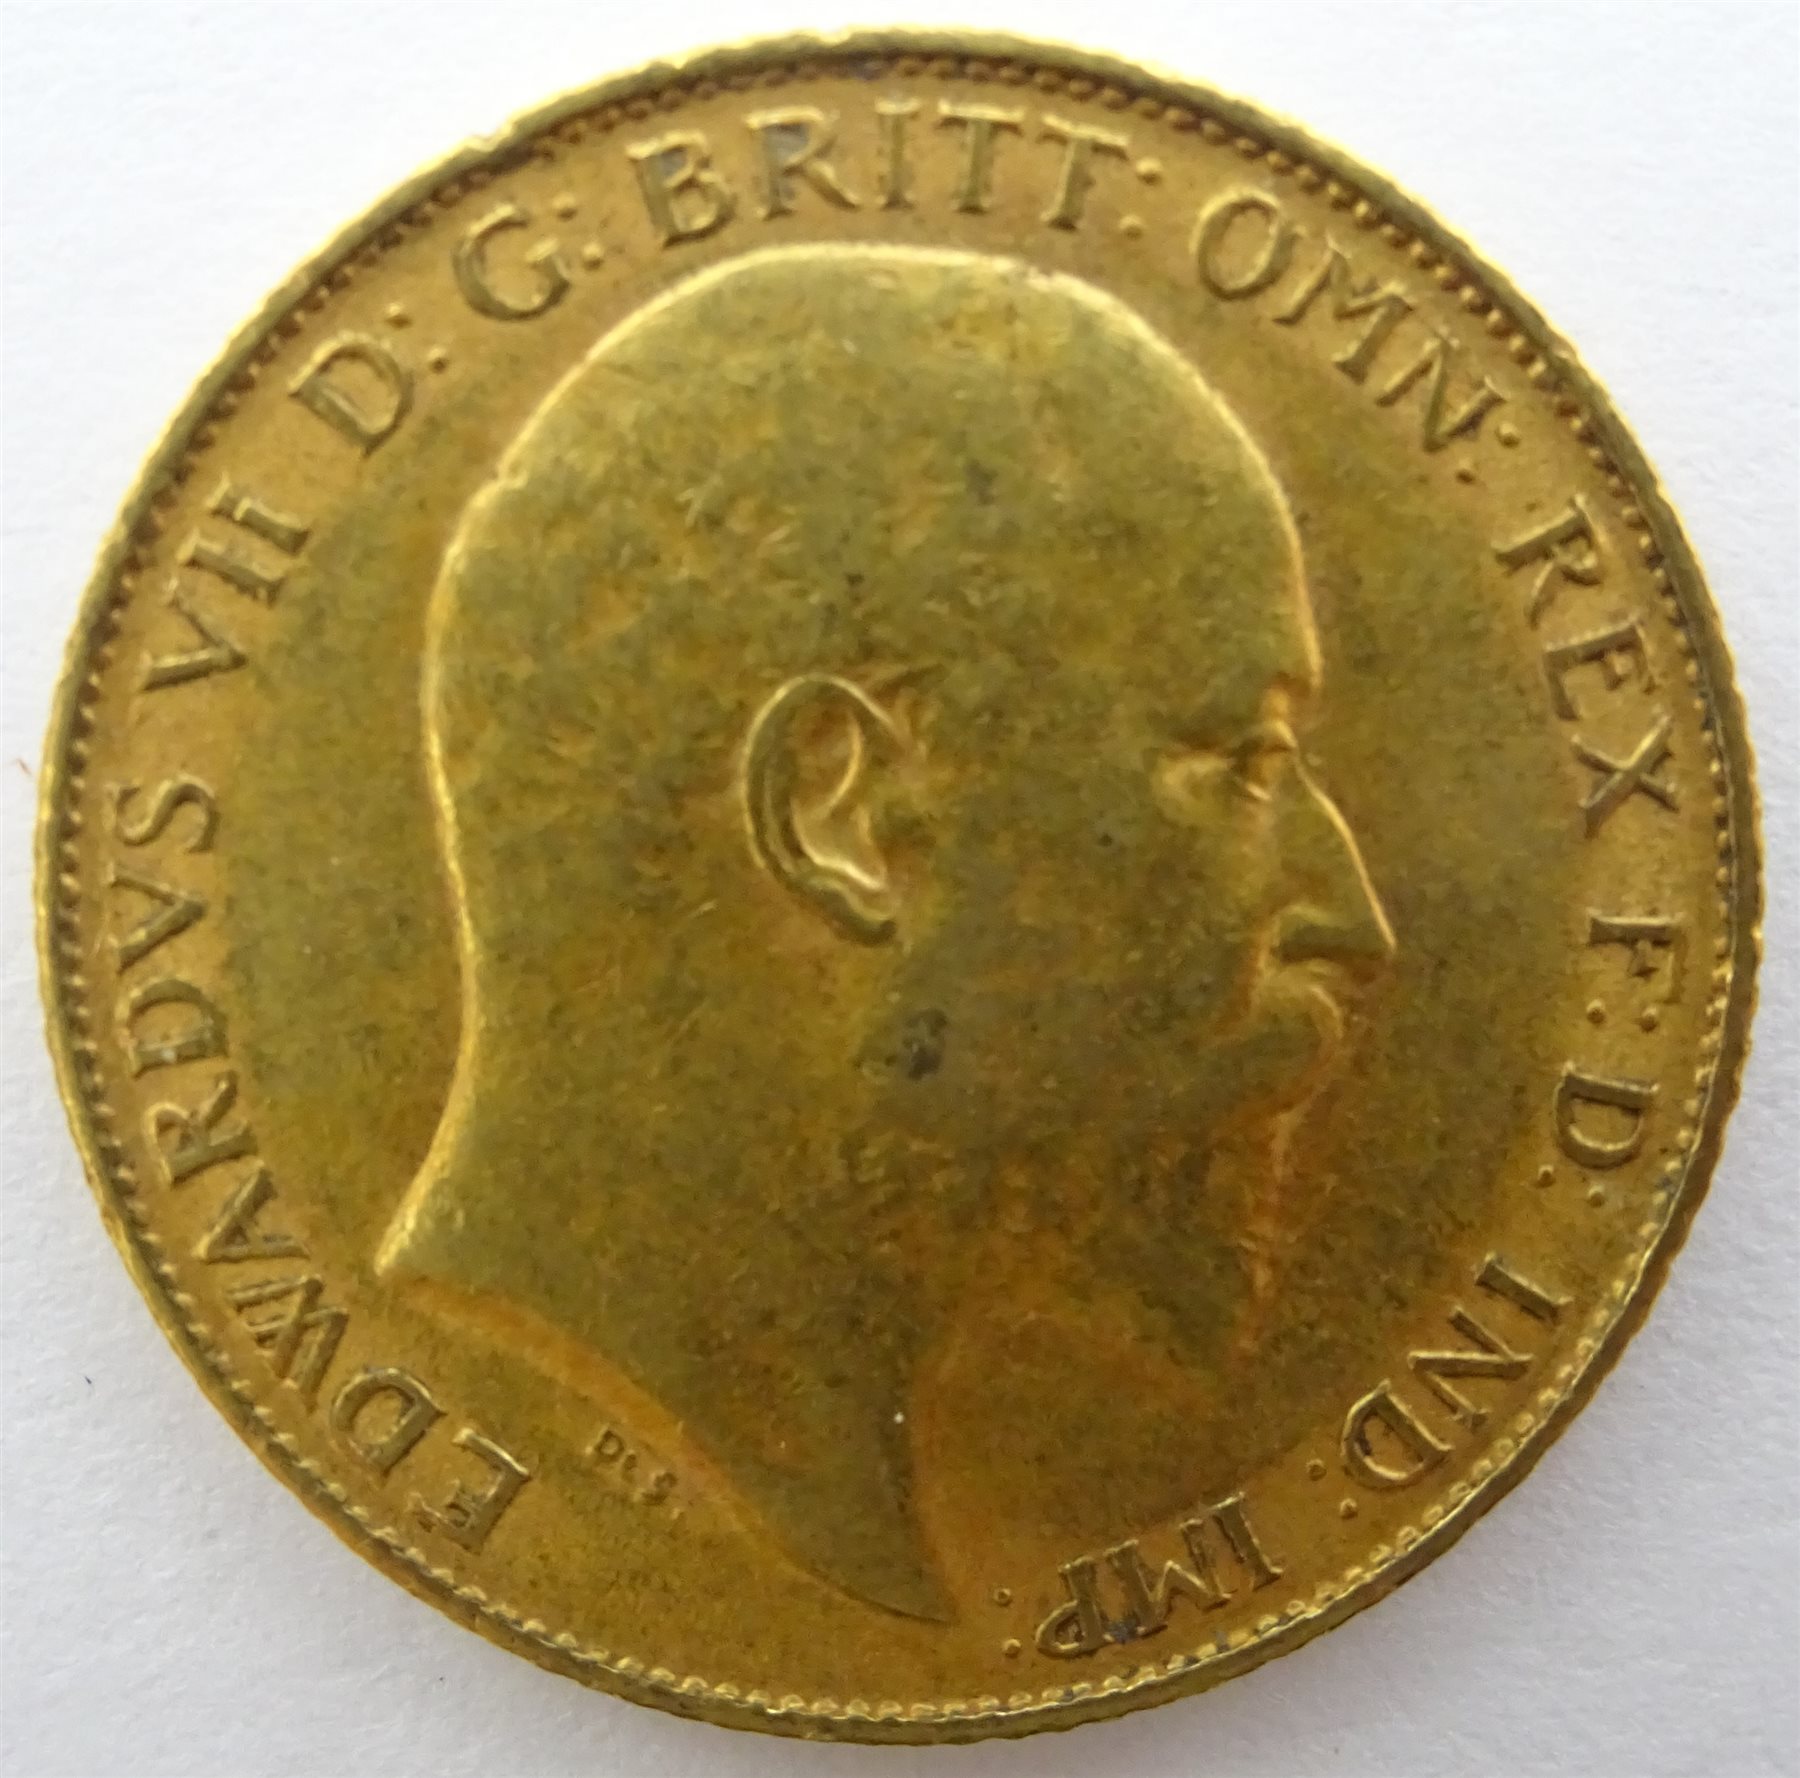 King Edward VII 1907 gold half sovereign - Coins, Banknotes & Stamps